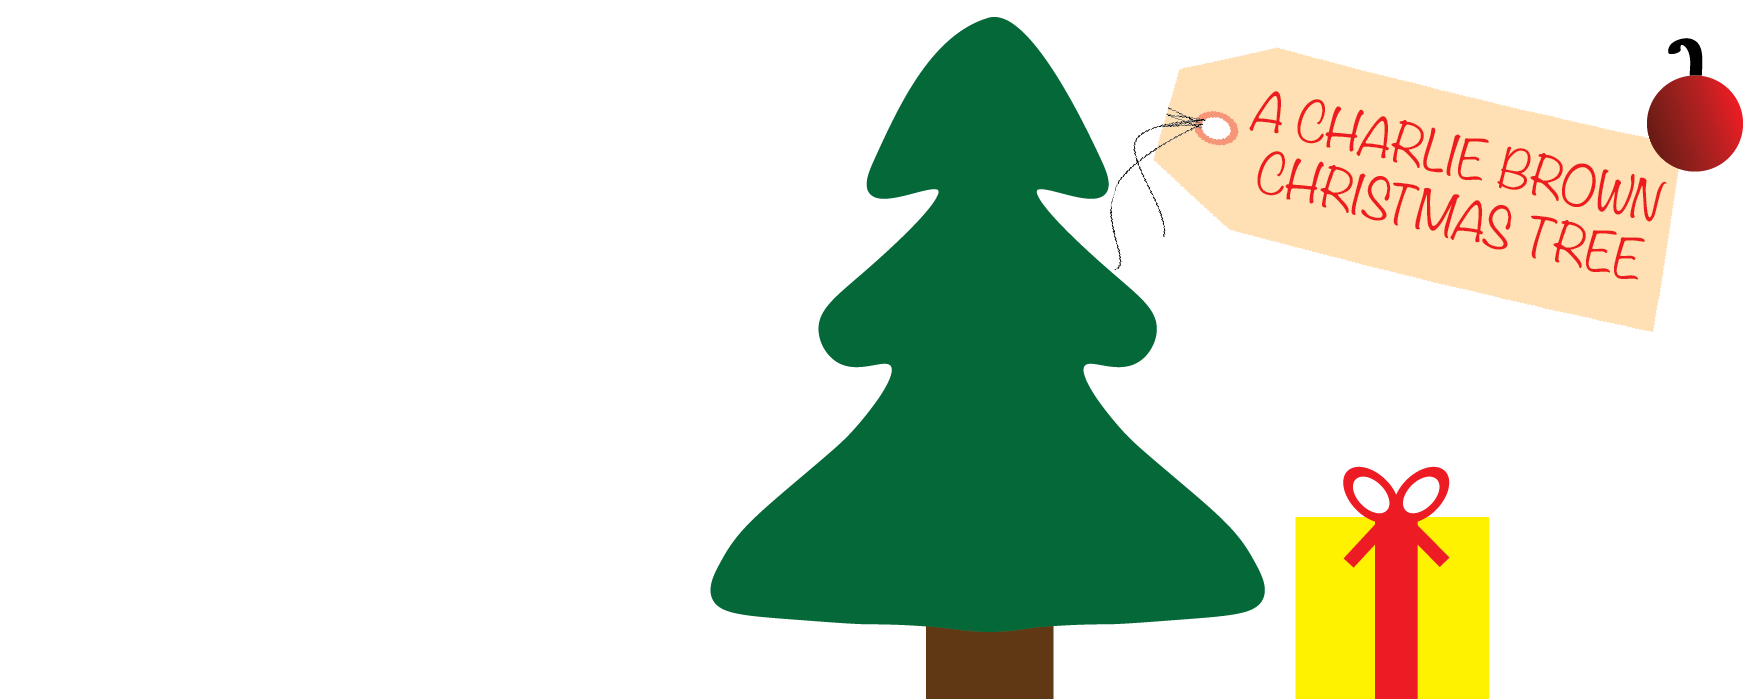 A Charlie Brown Christmas Tree Workshop image.png